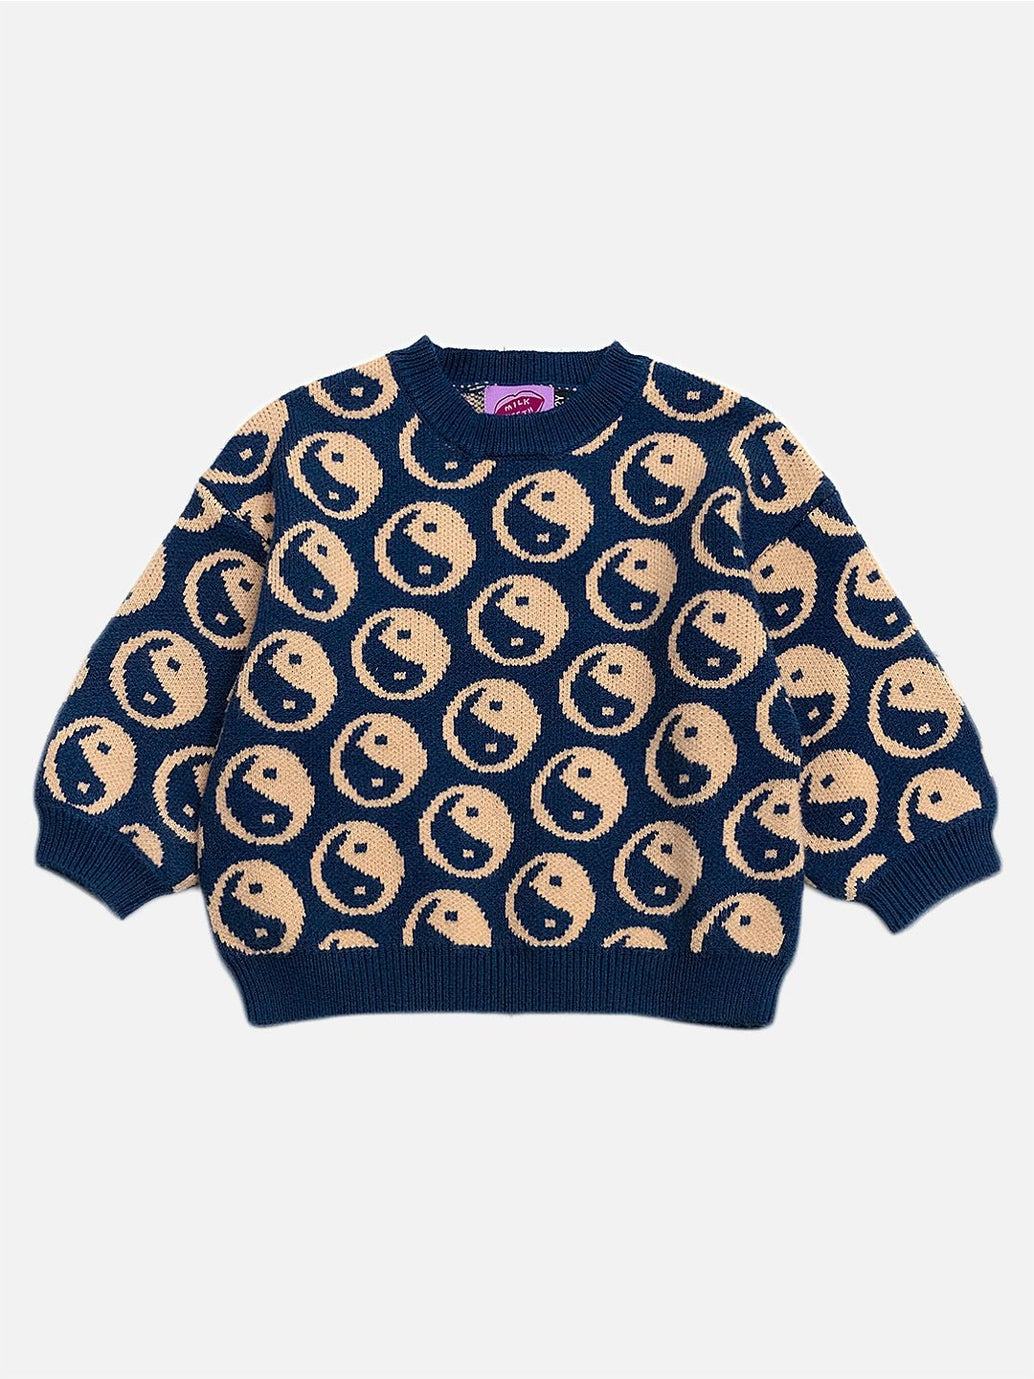 Cosmos Sweater, Navy